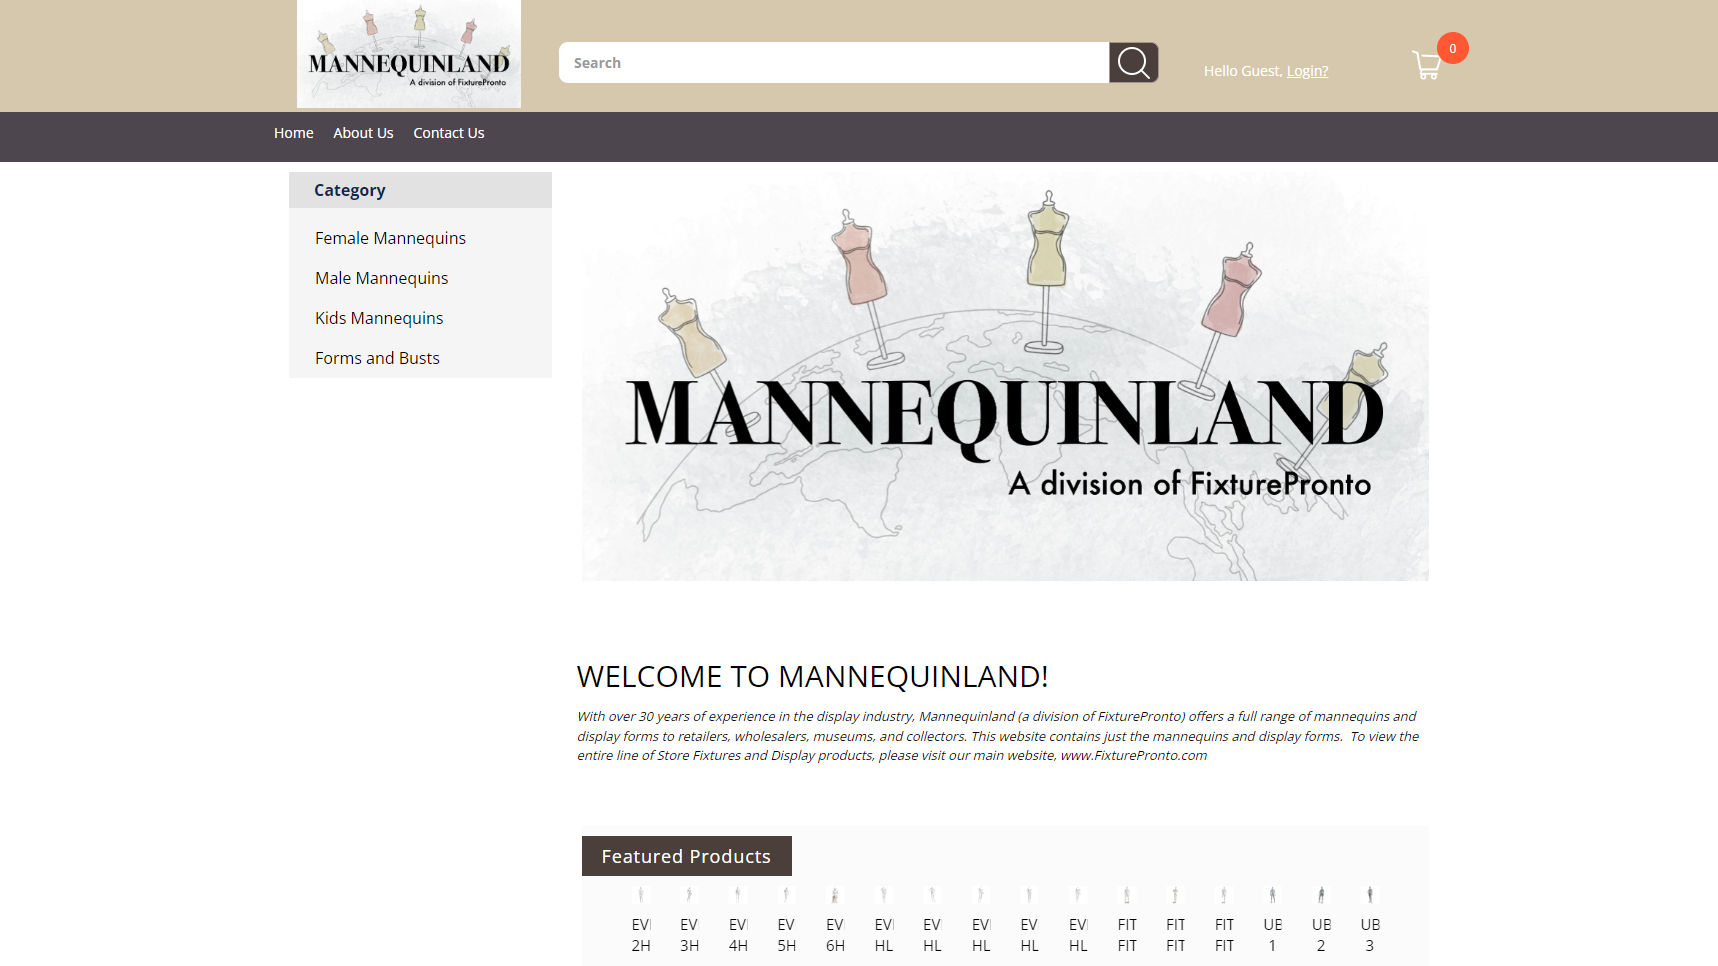 MannequinLand - Department Store Mannequin Manufacturer